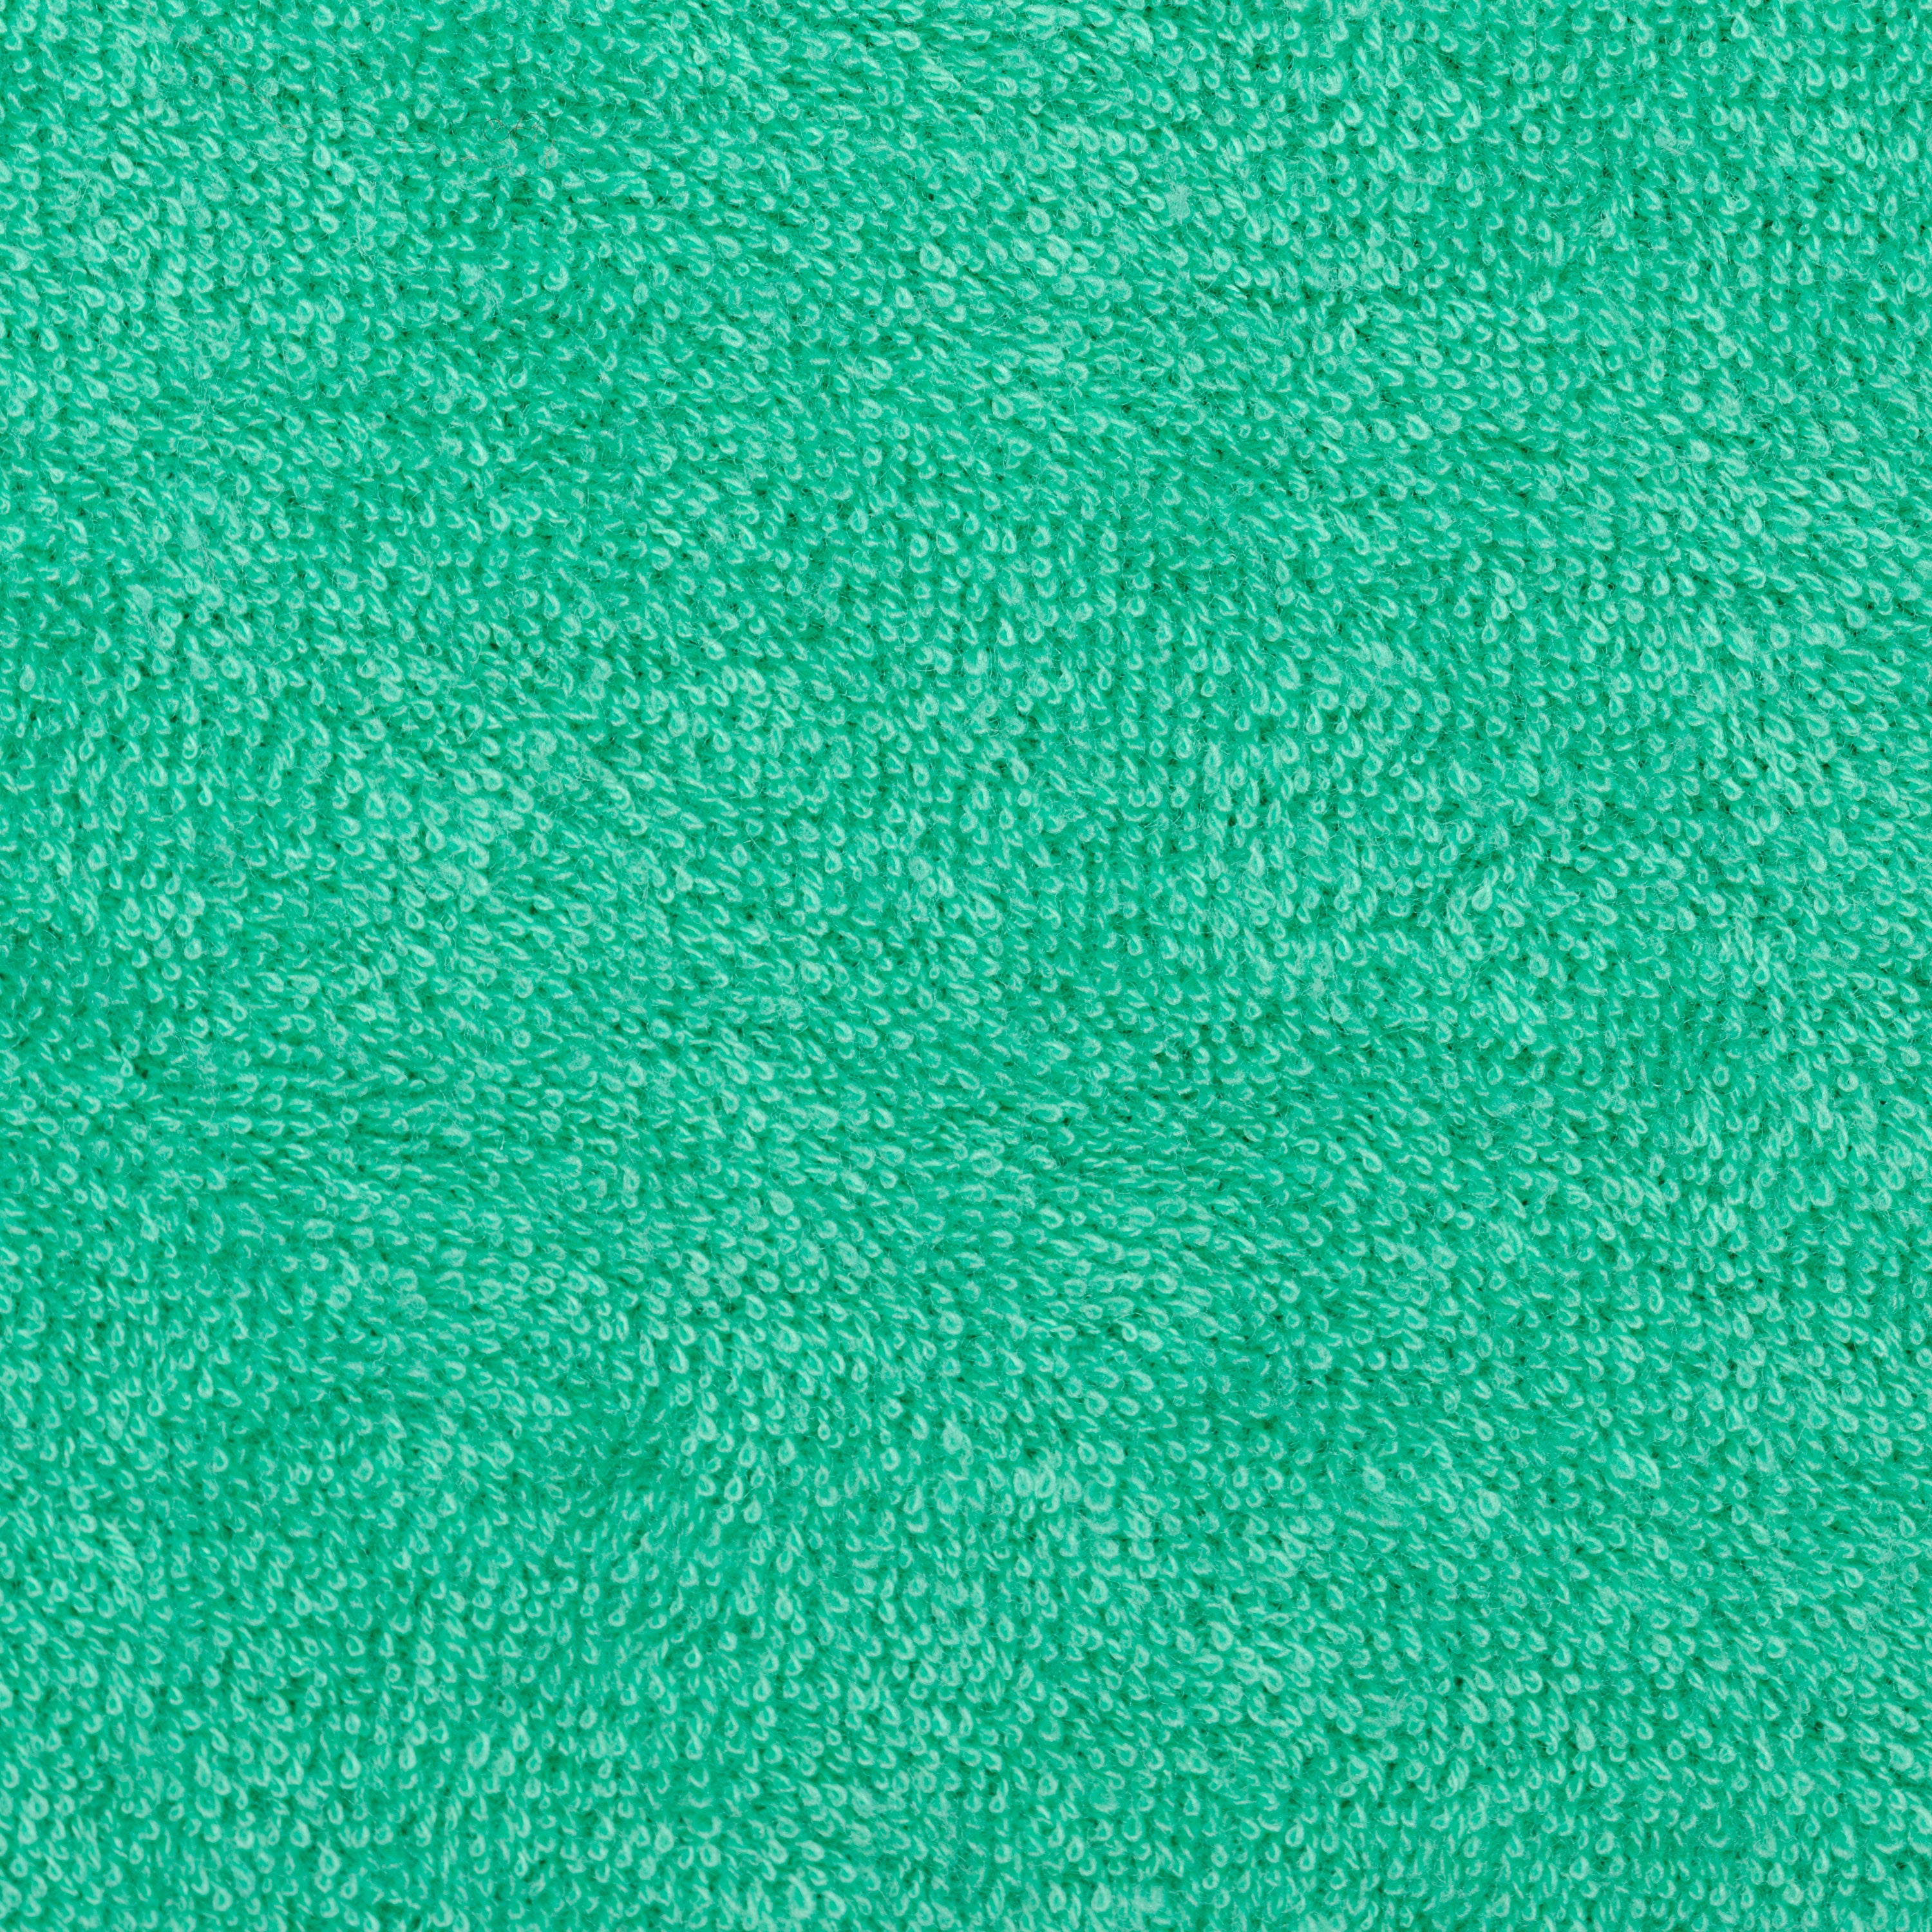 FEDELI "Mondial" Green Terry Cloth Short Sleeve Polo Shirt EU 48 NEW US S Slim Fit FEDELI